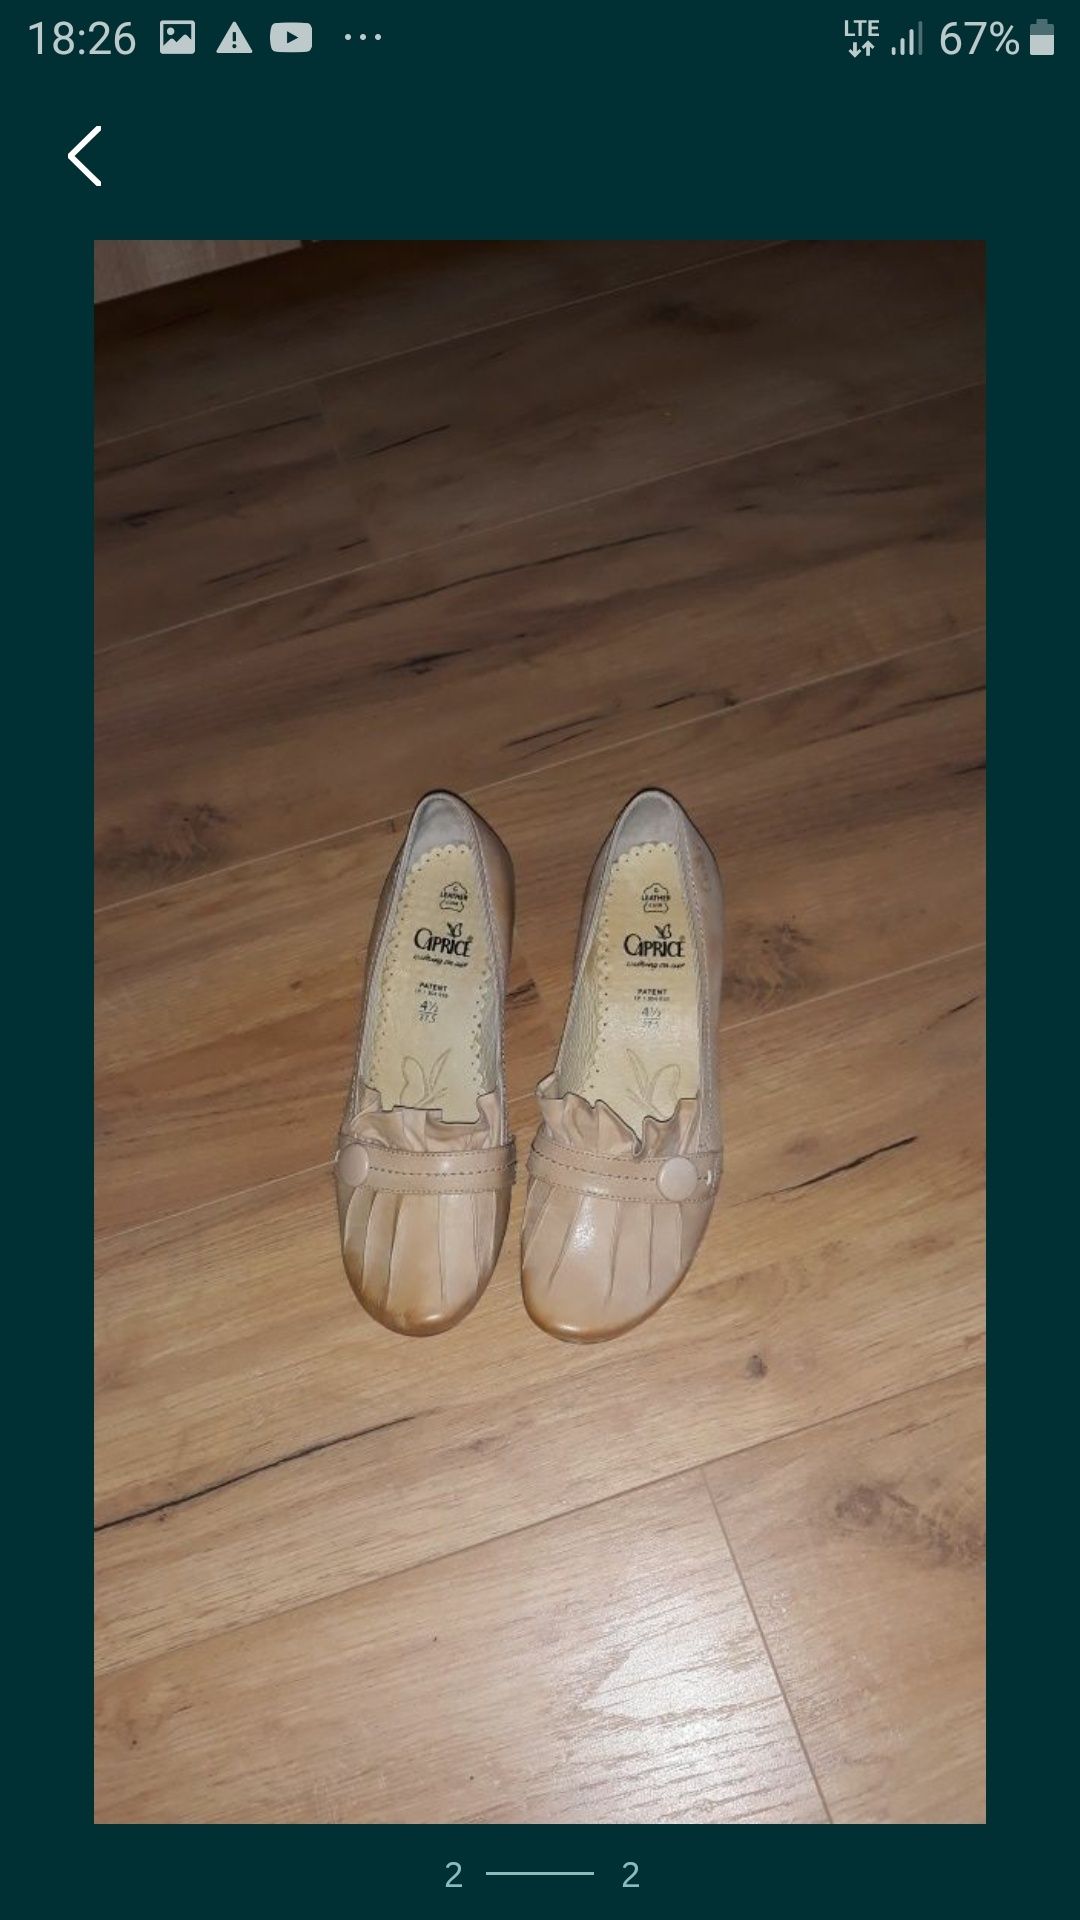 Caprice buty czółenka pantofle r. 37,5 4,5 gratis Tamaris czółenka